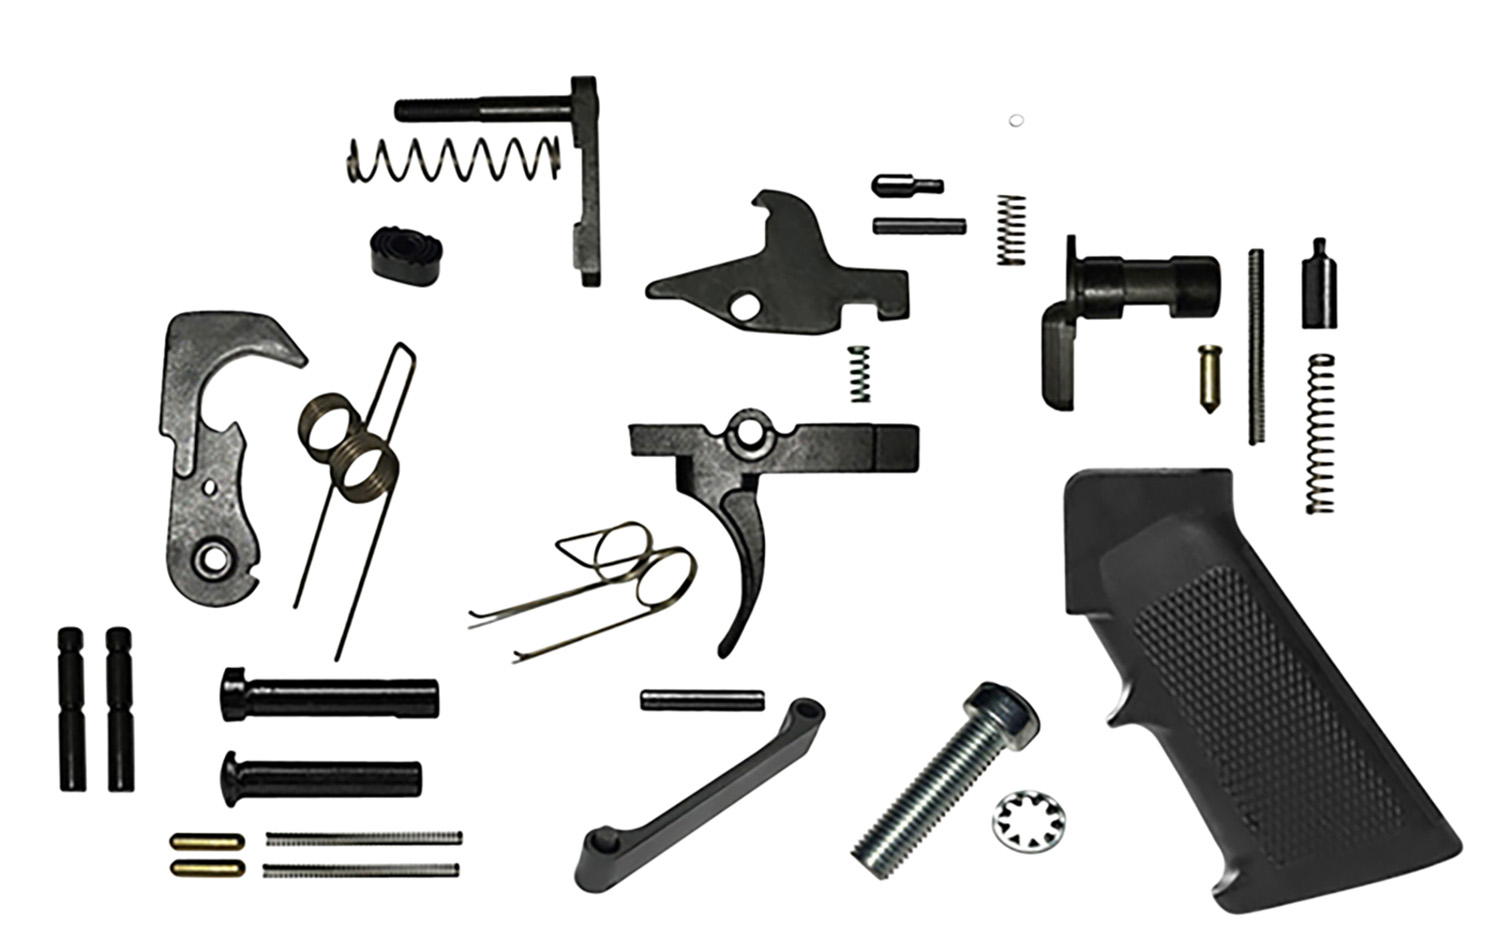 Del-Ton Inc LP1045 Lower Parts Kit  with Black Polymer Pistol Grip